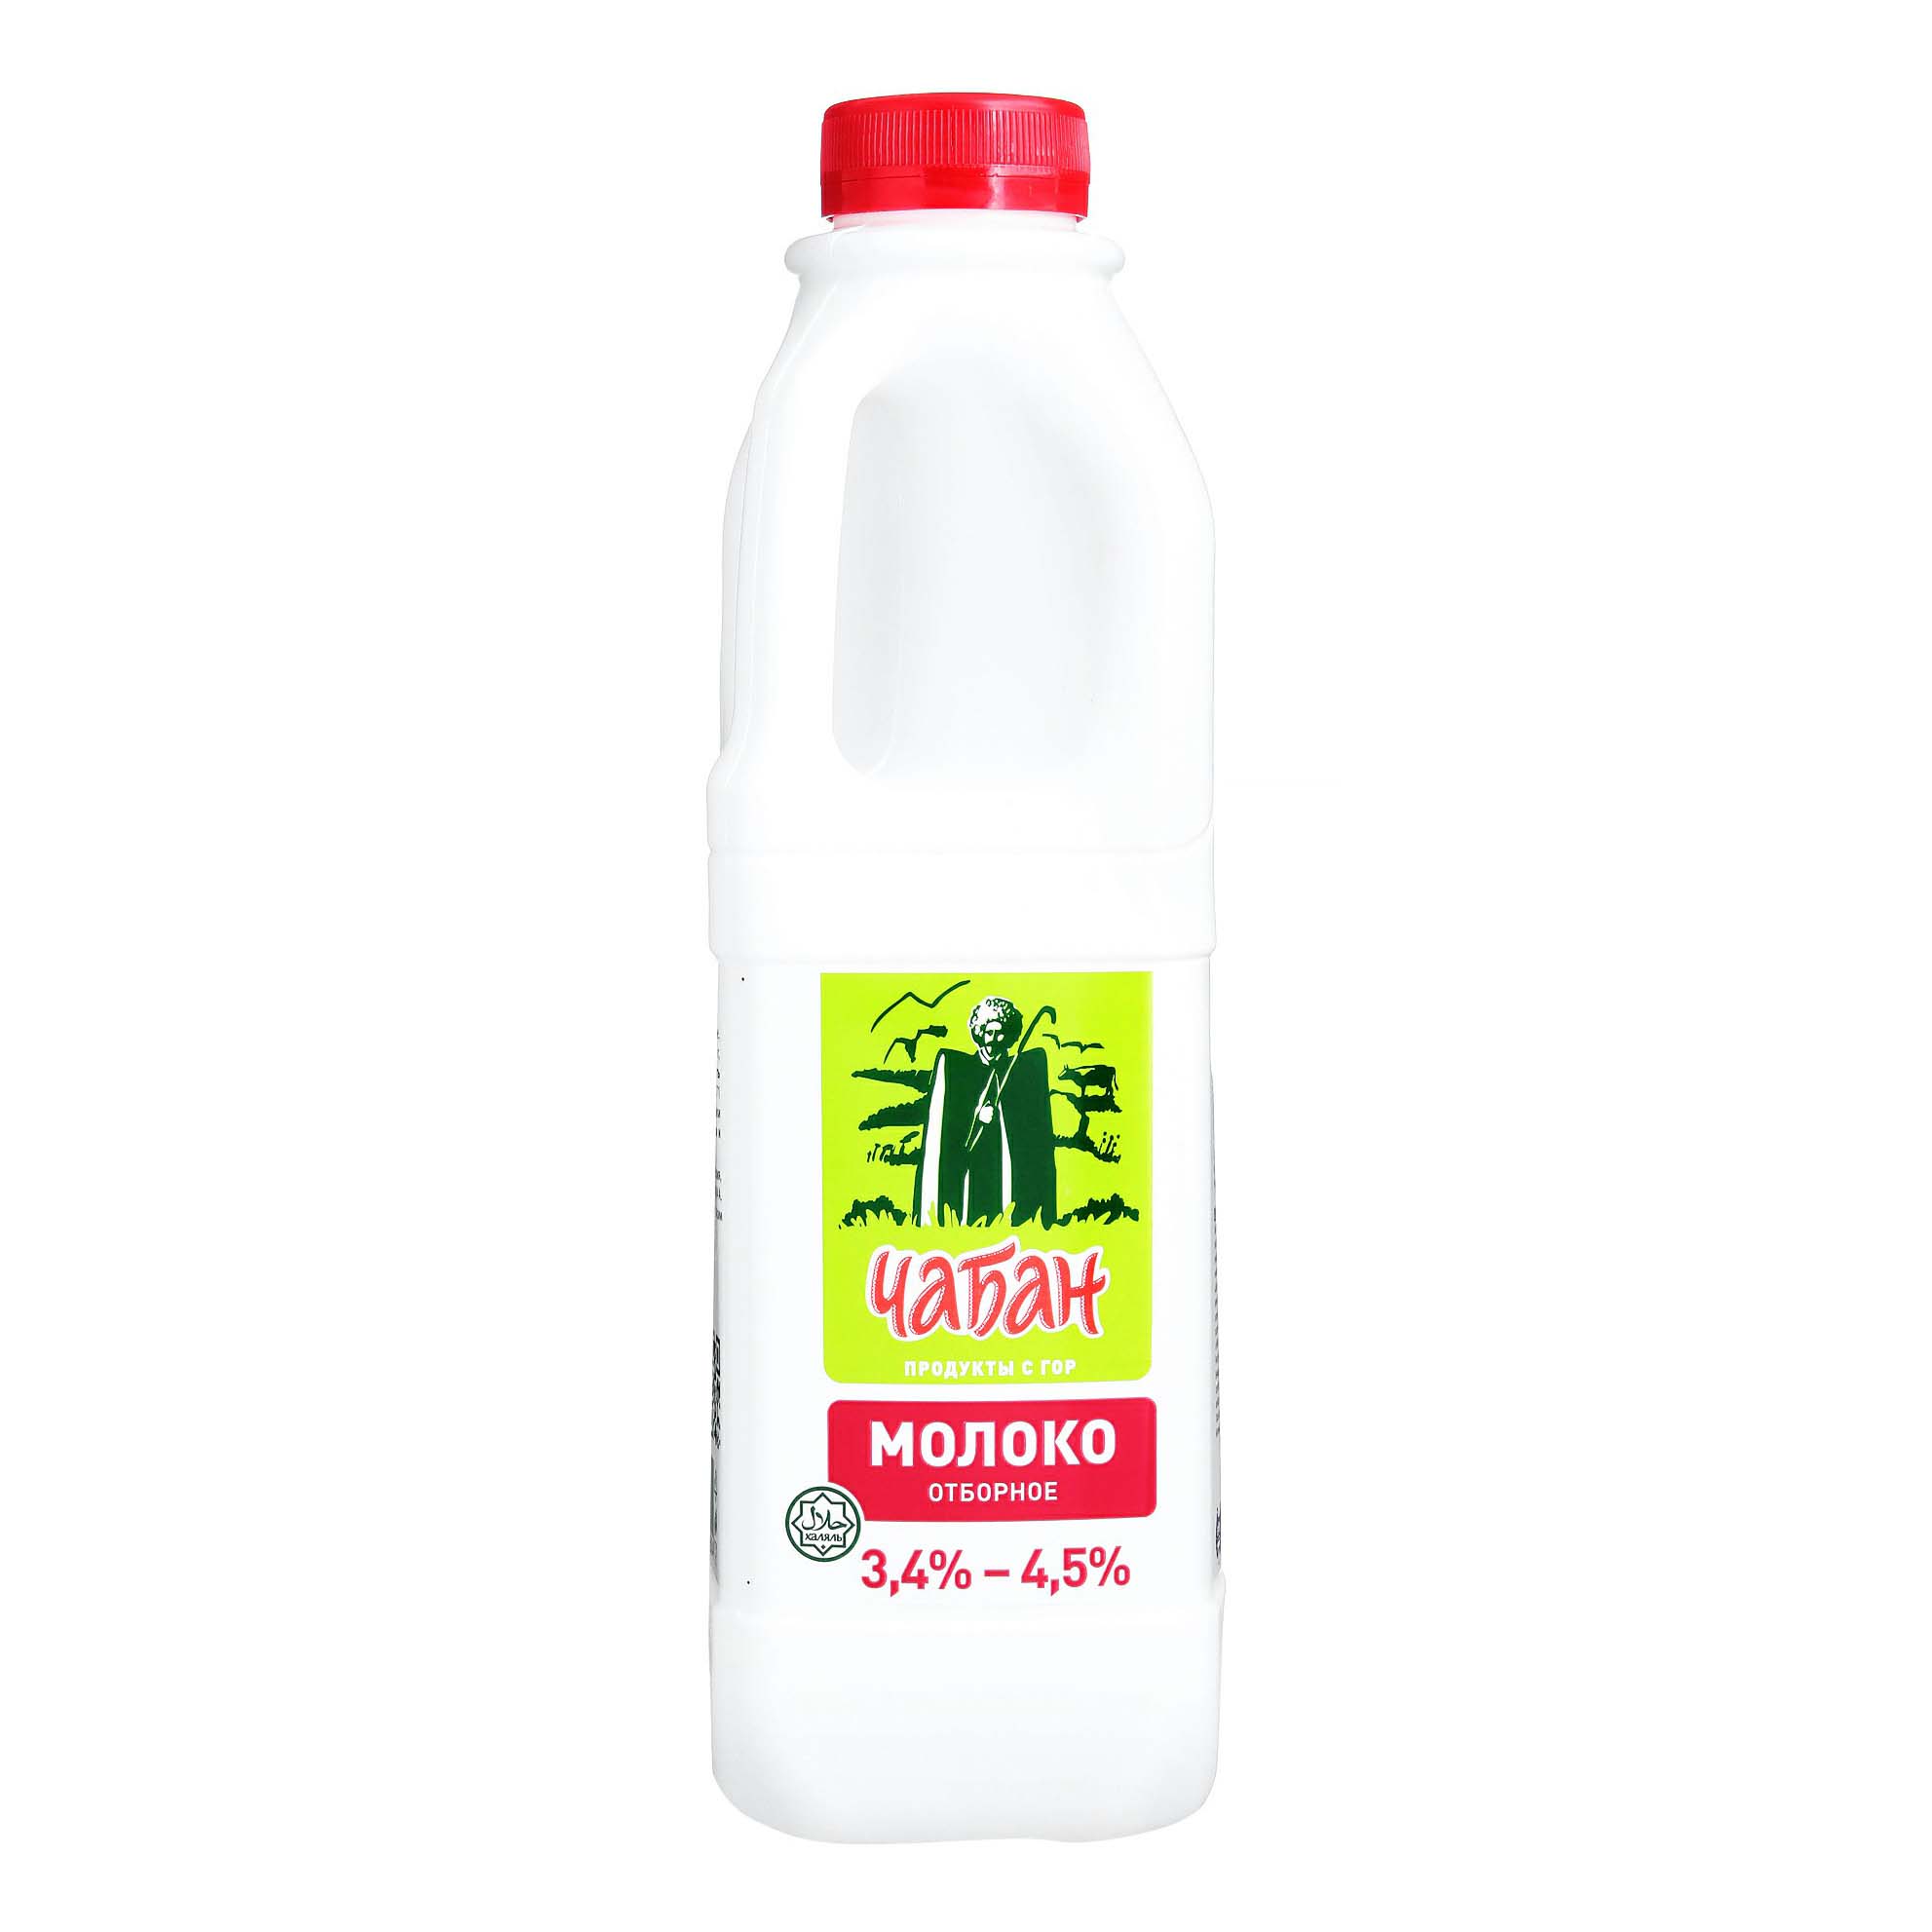 Молоко 3,4% - 4,5% отборное Чабан 930 мл